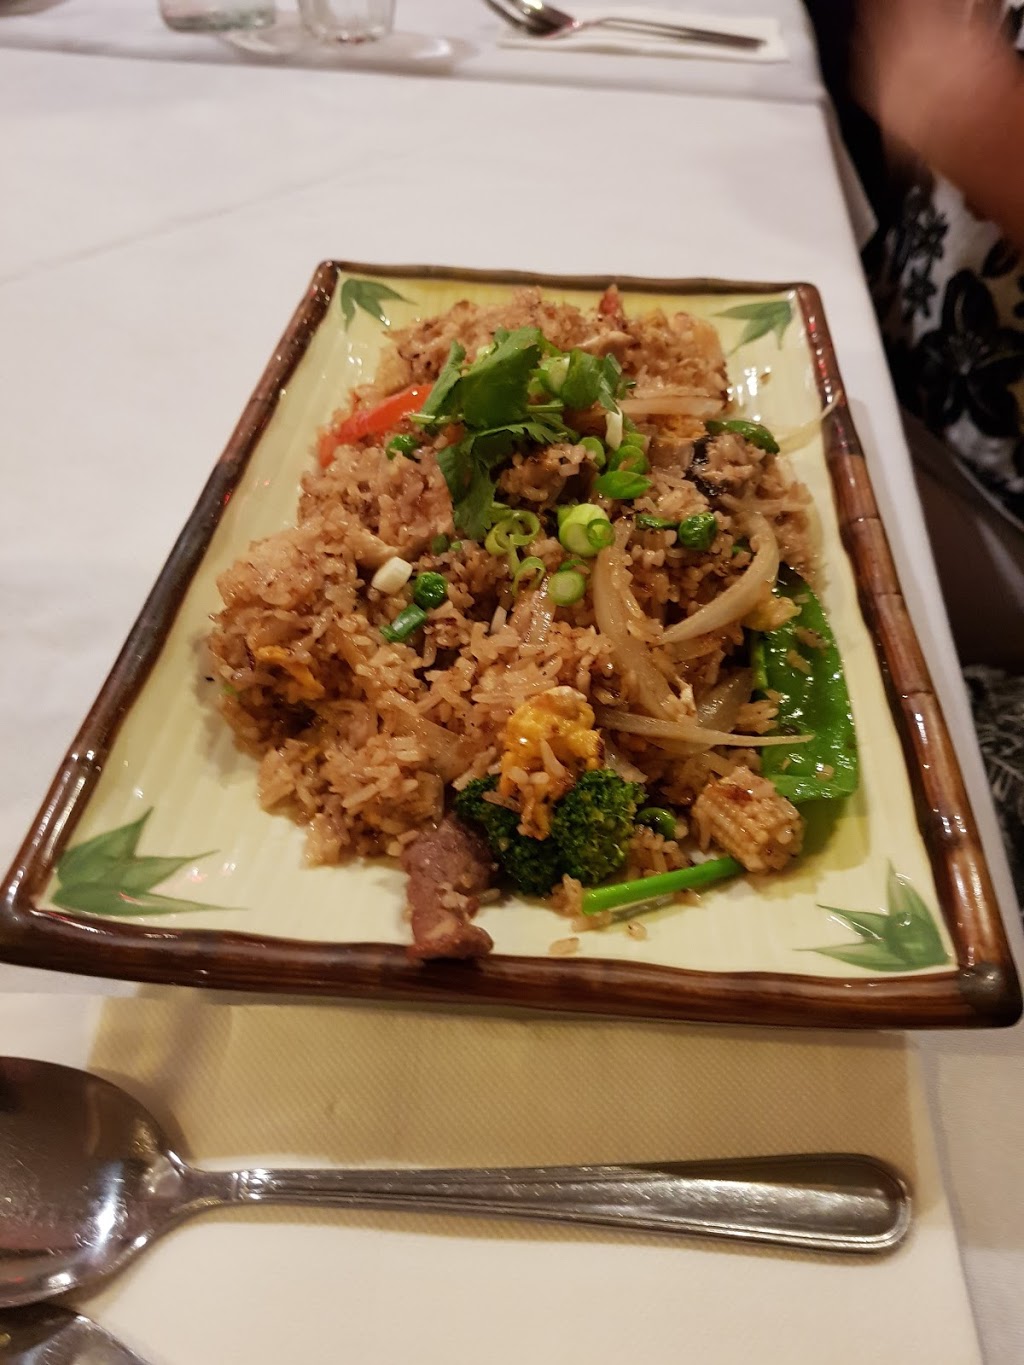 Siam Bayside Thai Restaurant | restaurant | 4/506 Nepean Hwy, Frankston VIC 3199, Australia | 0397838310 OR +61 3 9783 8310